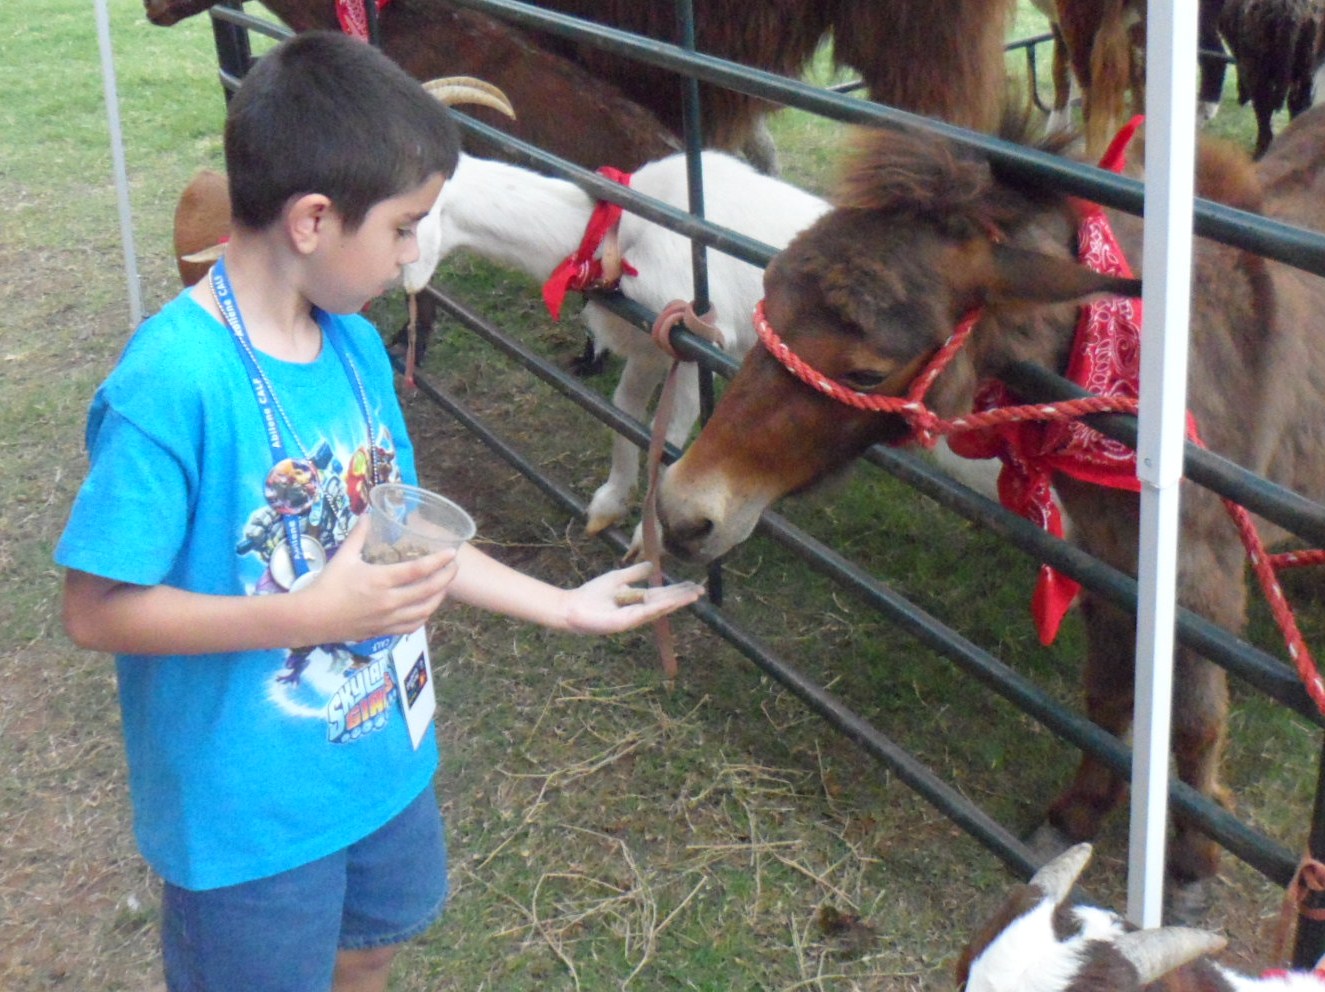 Connor feeding the miniature horse